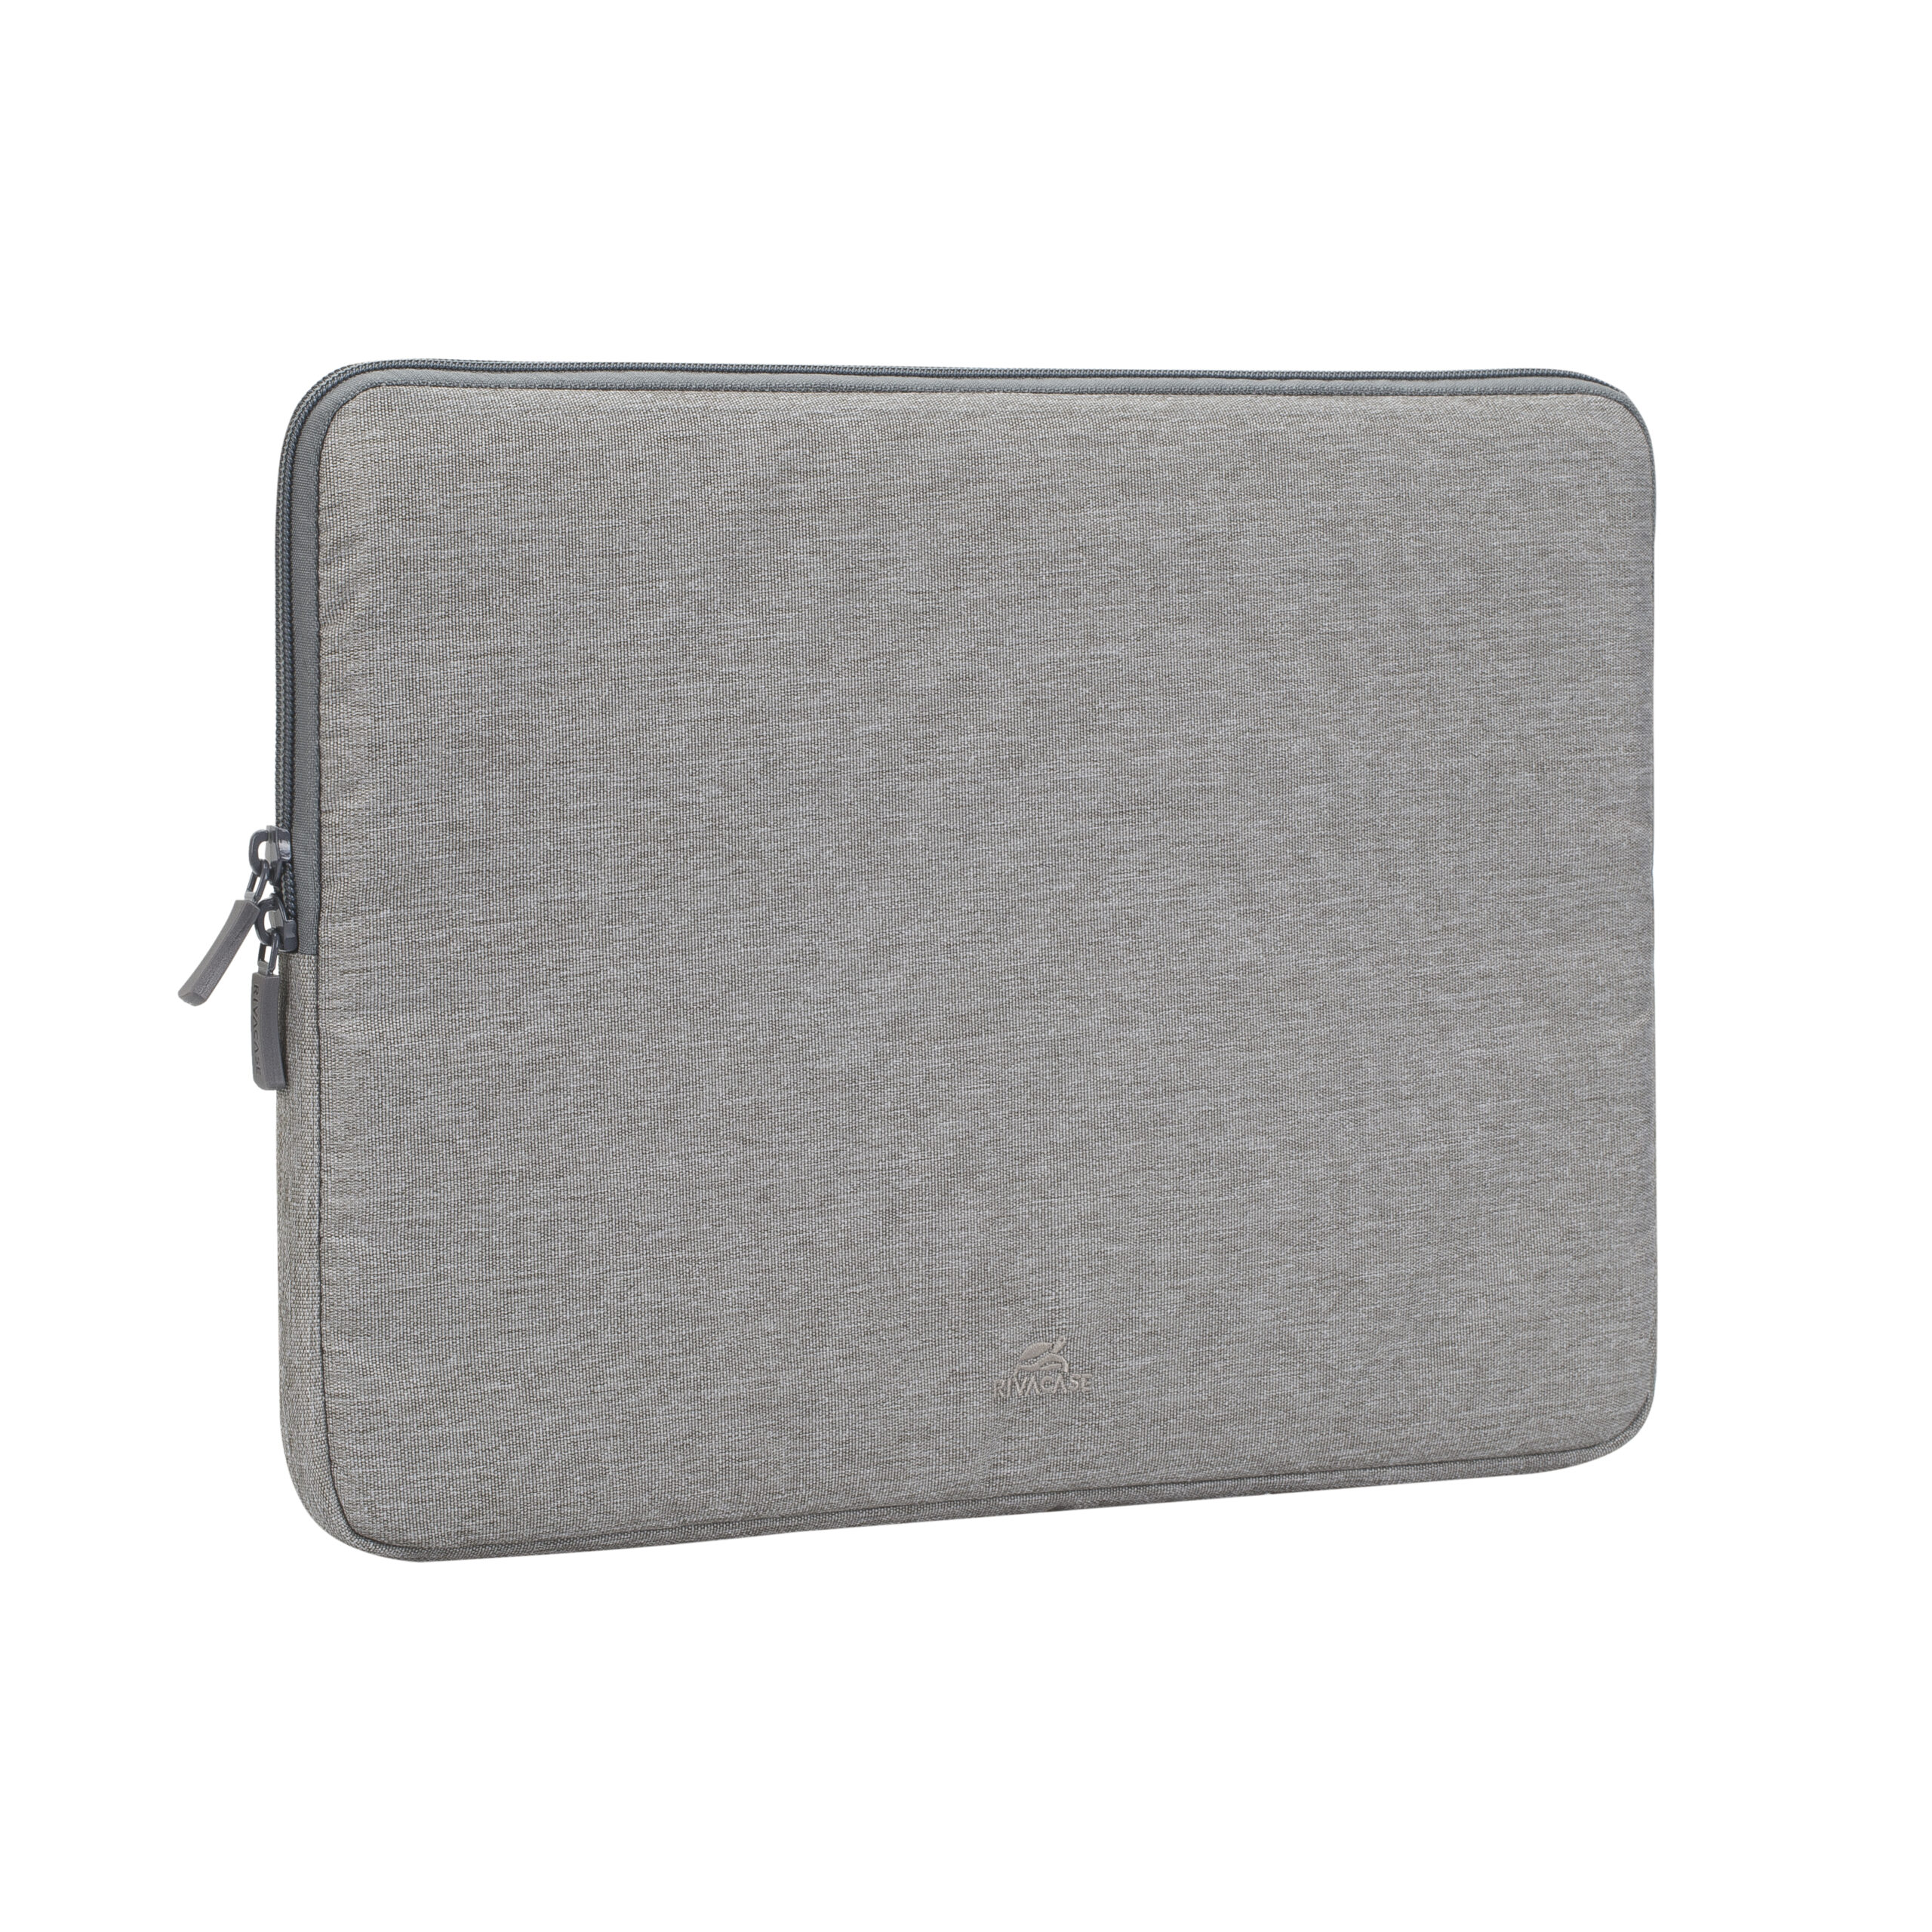 RIVACASE 7703 grey Laptop sleeve 13.3″ / 12